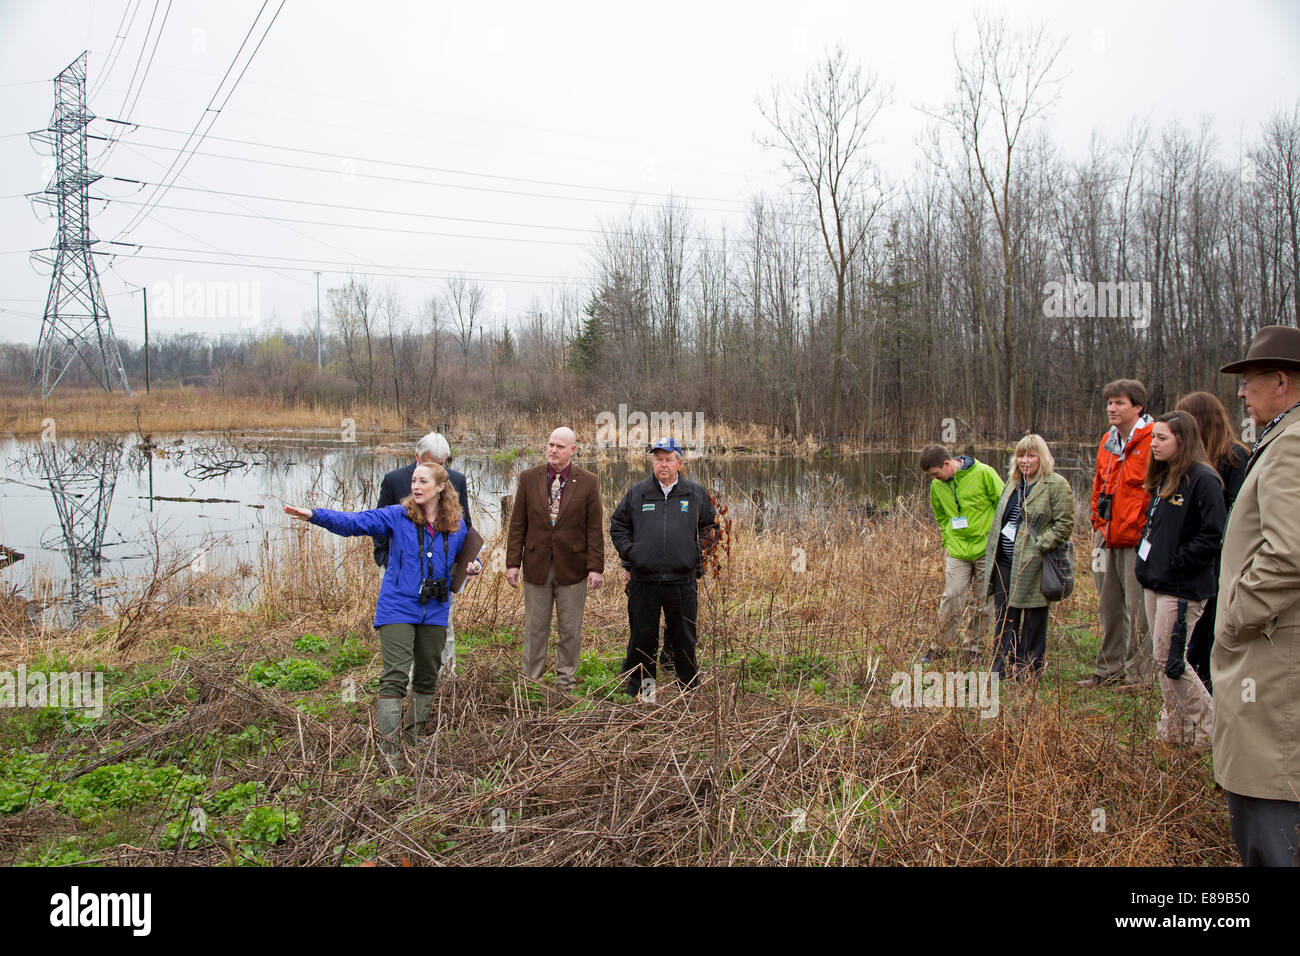 Novi, Michigan - Members of the Wildlife Habitat Council tour the property of ITC Holdings. Stock Photo